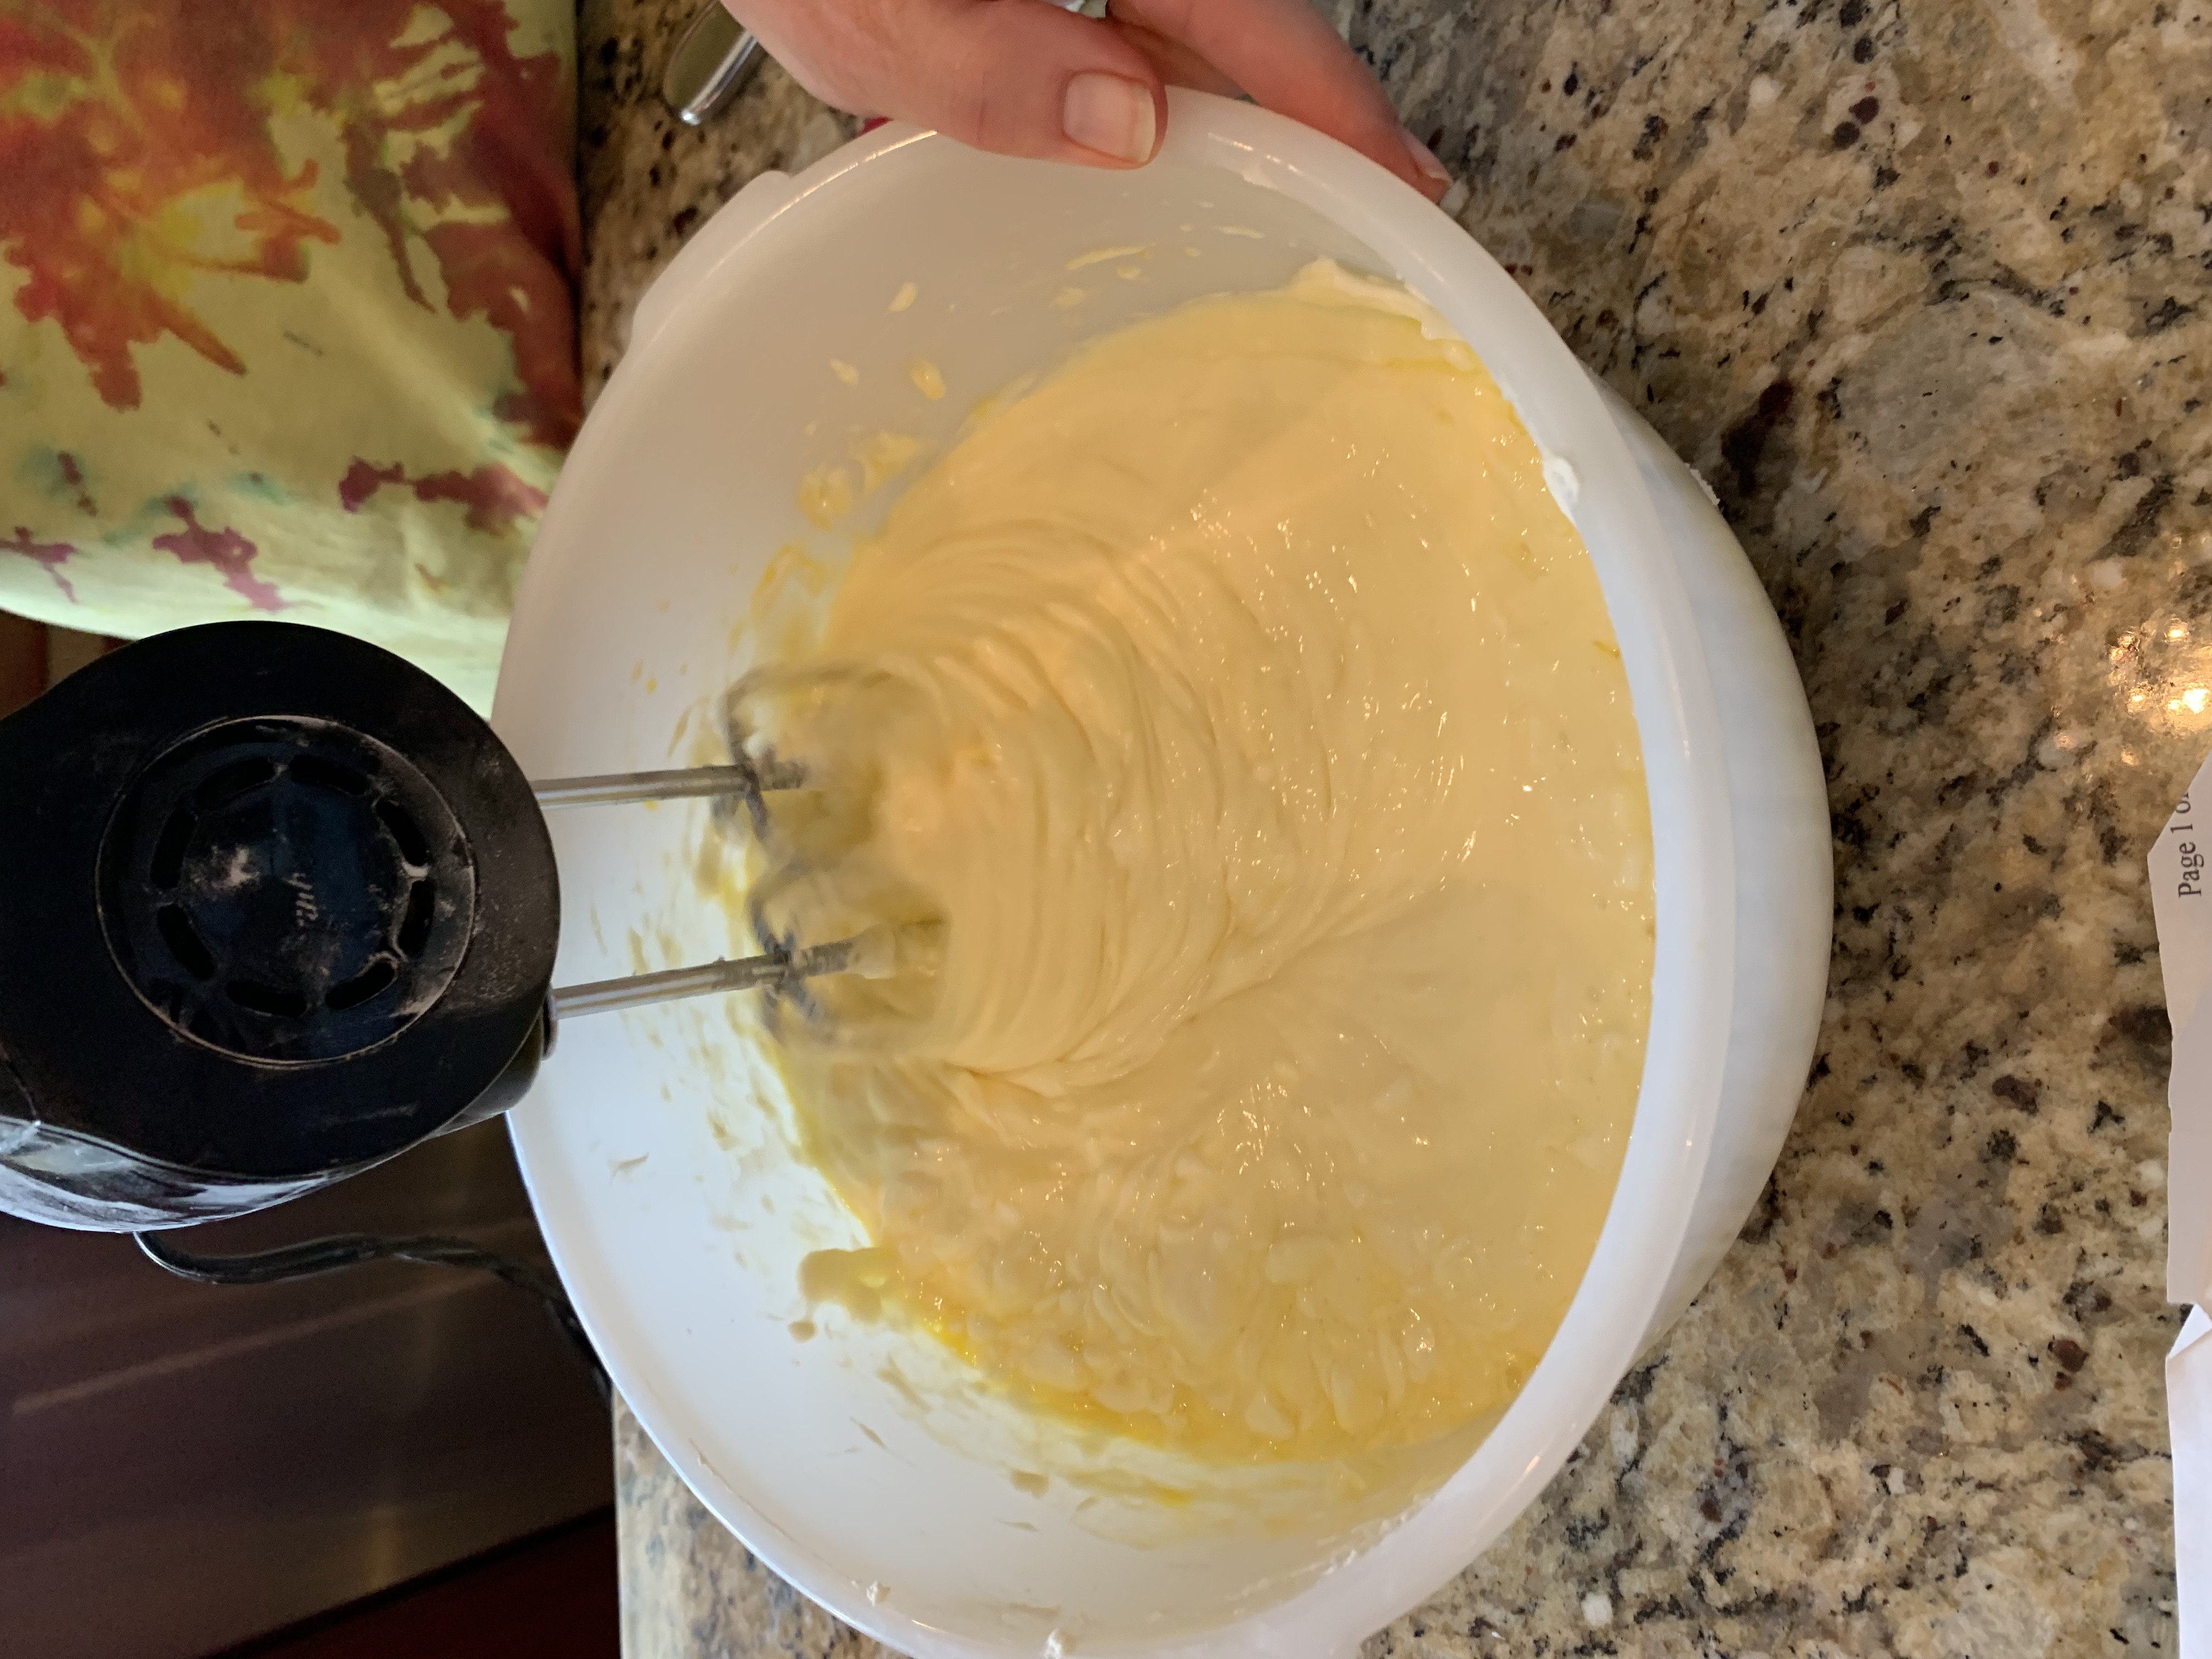 The eggnog cheesecake mixing bowl